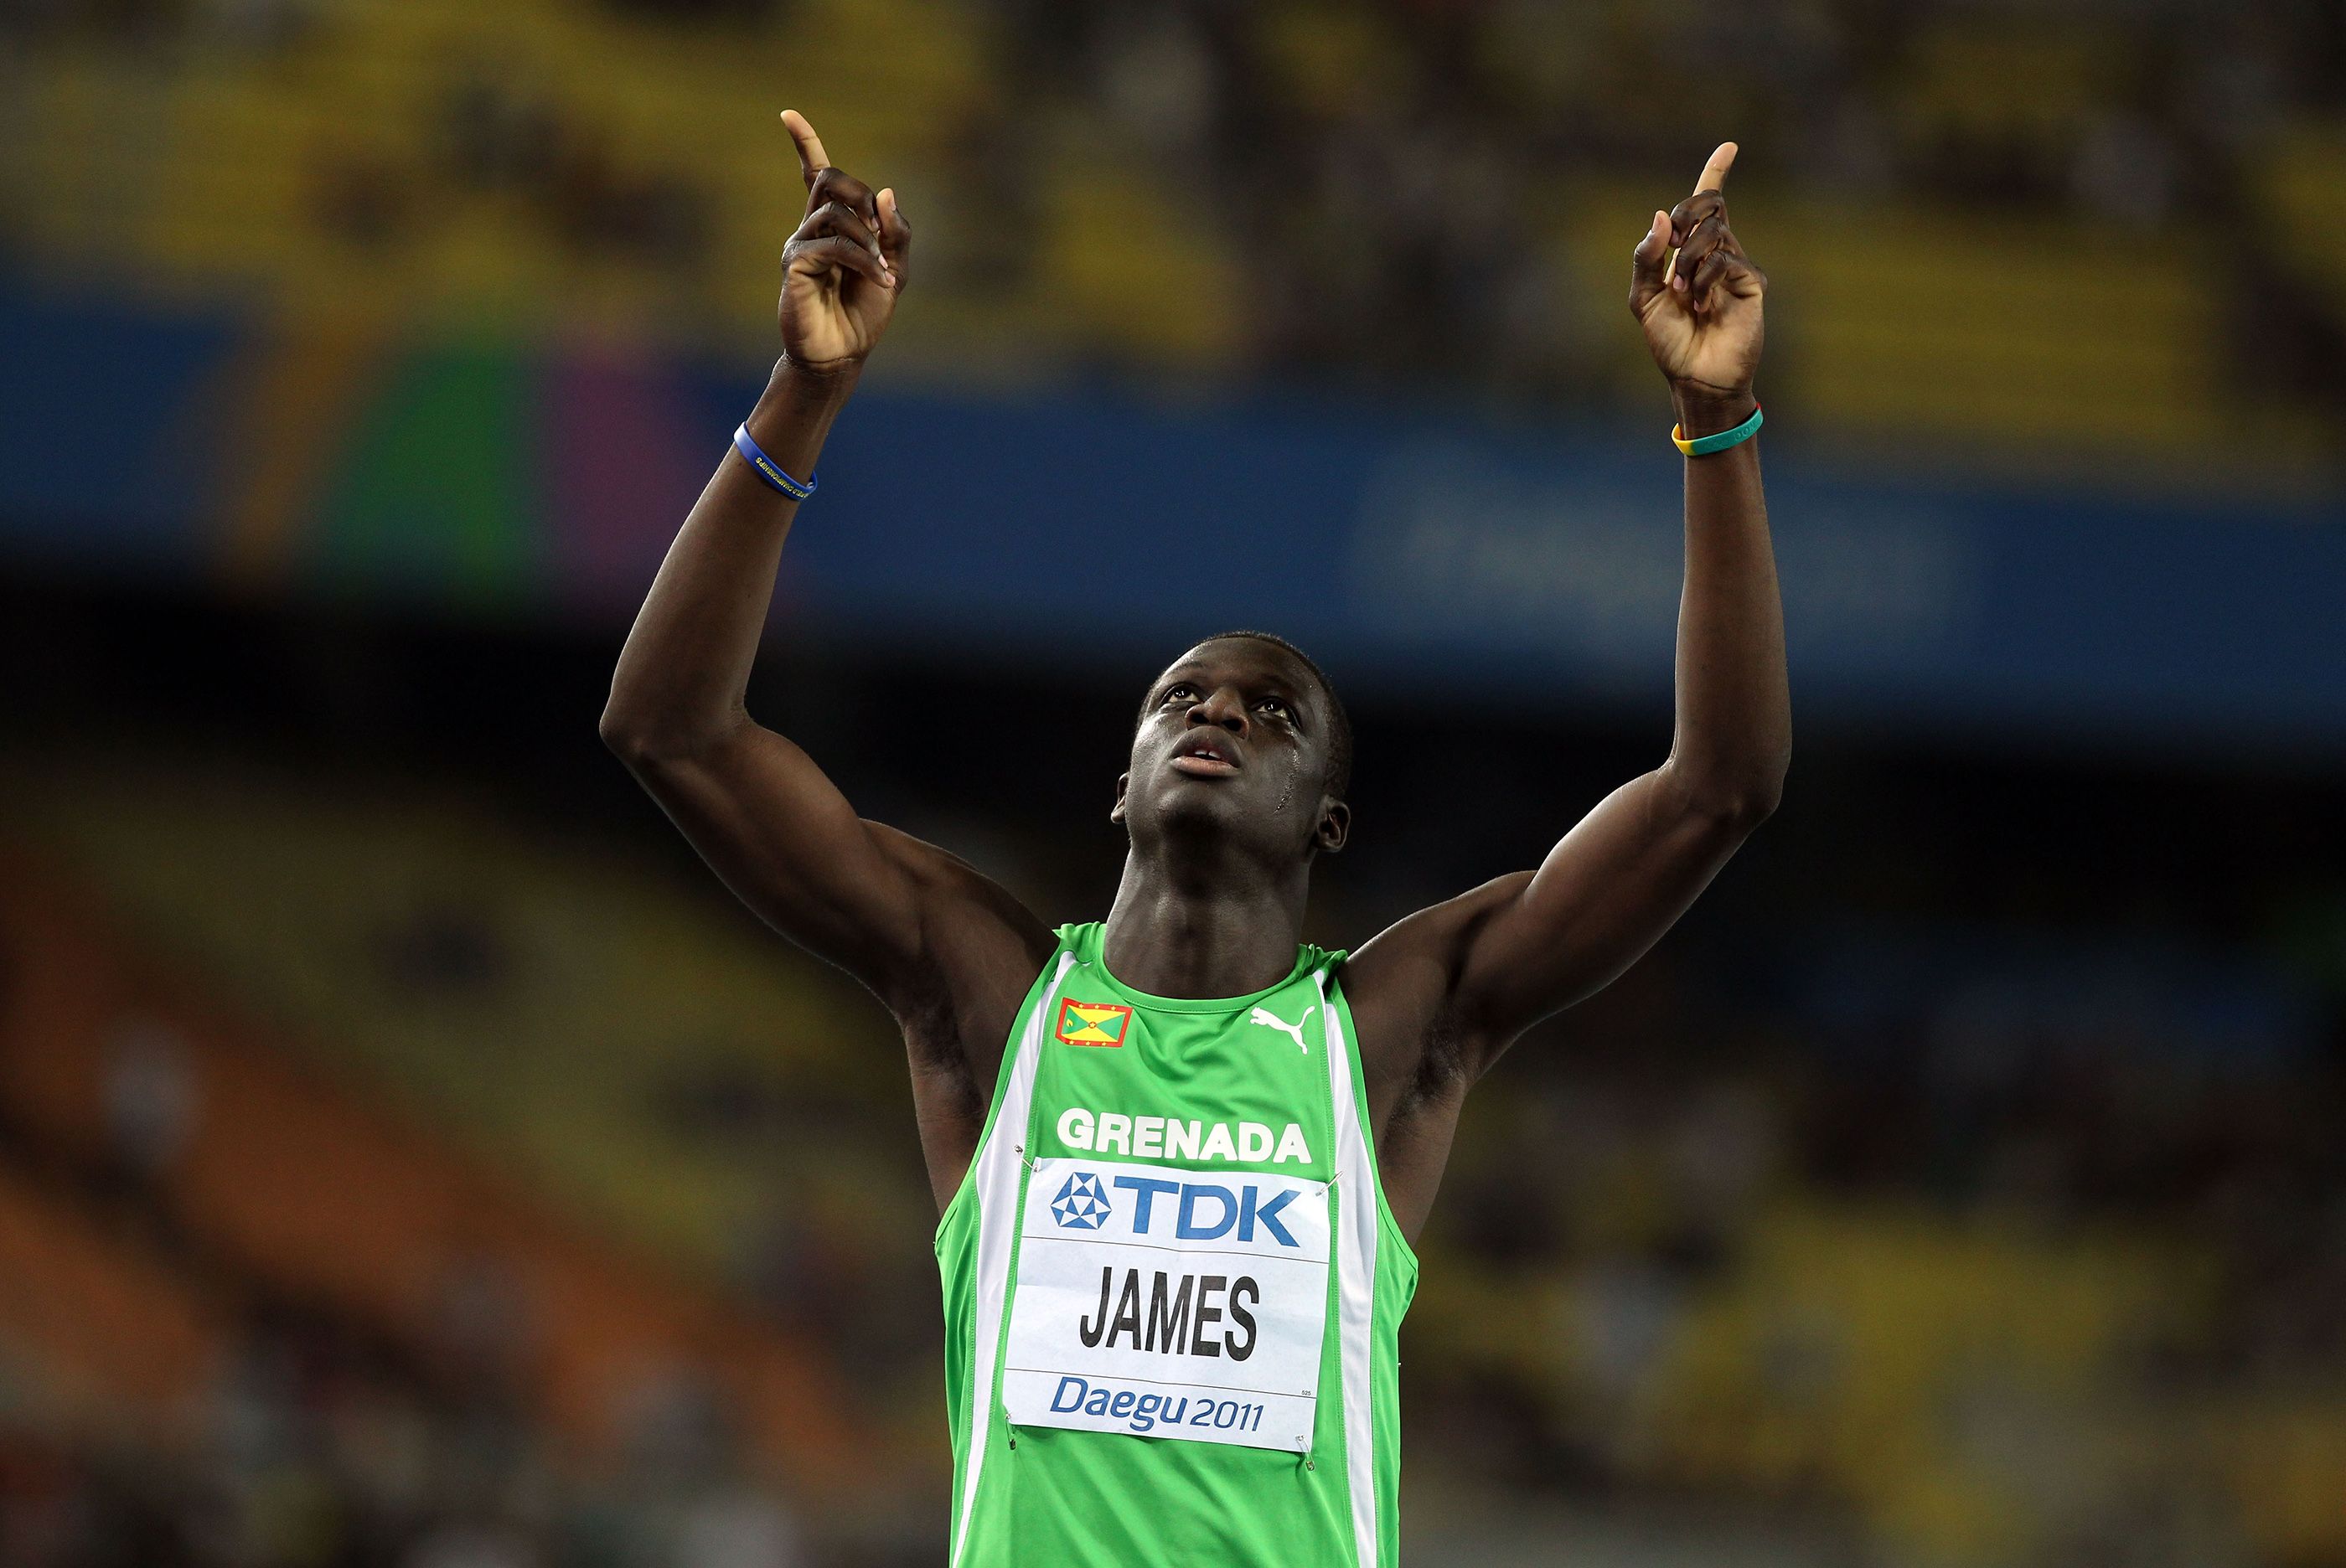 Kirani James celebrates his 2011 world 400m title win in Daegu